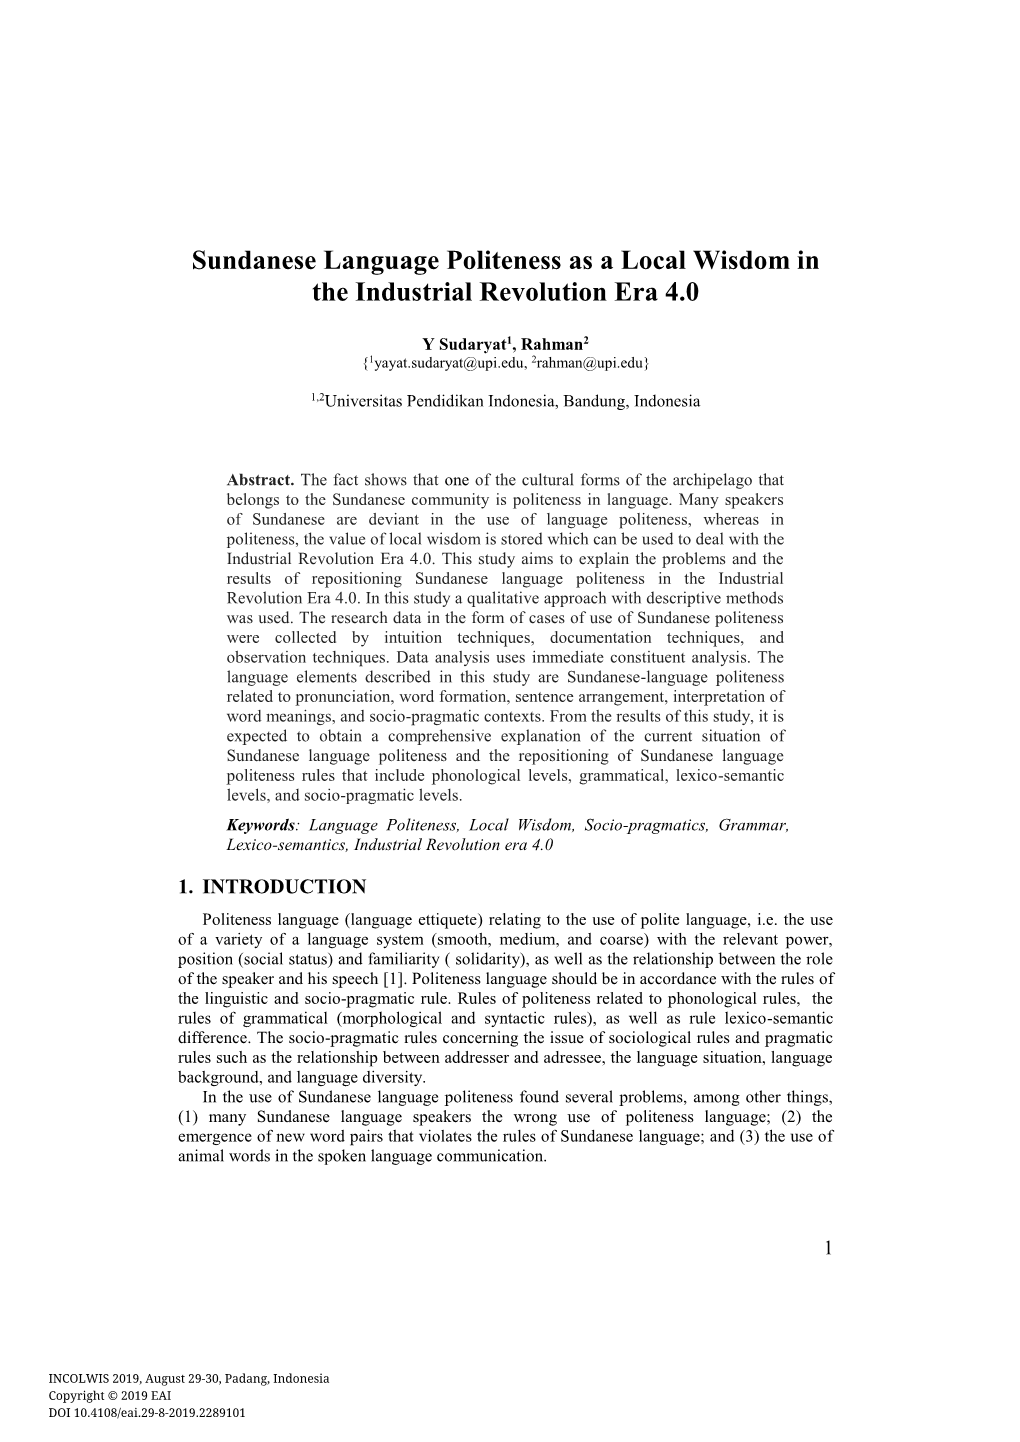 Sundanese Language Politeness As a Local Wisdom in the Industrial Revolution Era 4.0